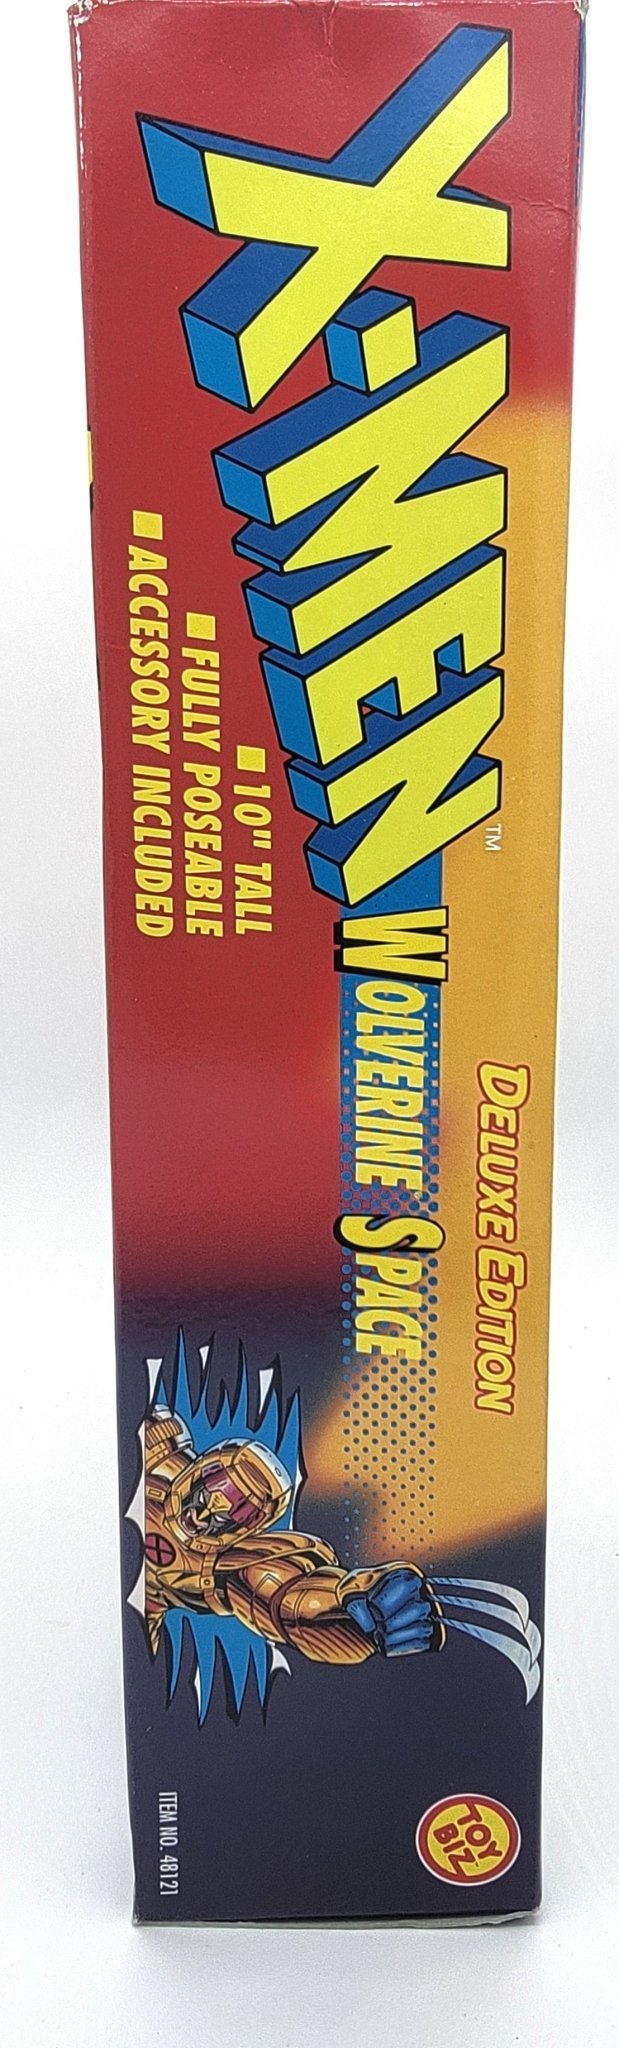 Toy Biz - Toy Biz | X-Men Deluxe Edition Wolverine Space 1995 | Vintage Marvel Action Figure - Action Figures - Steady Bunny Shop